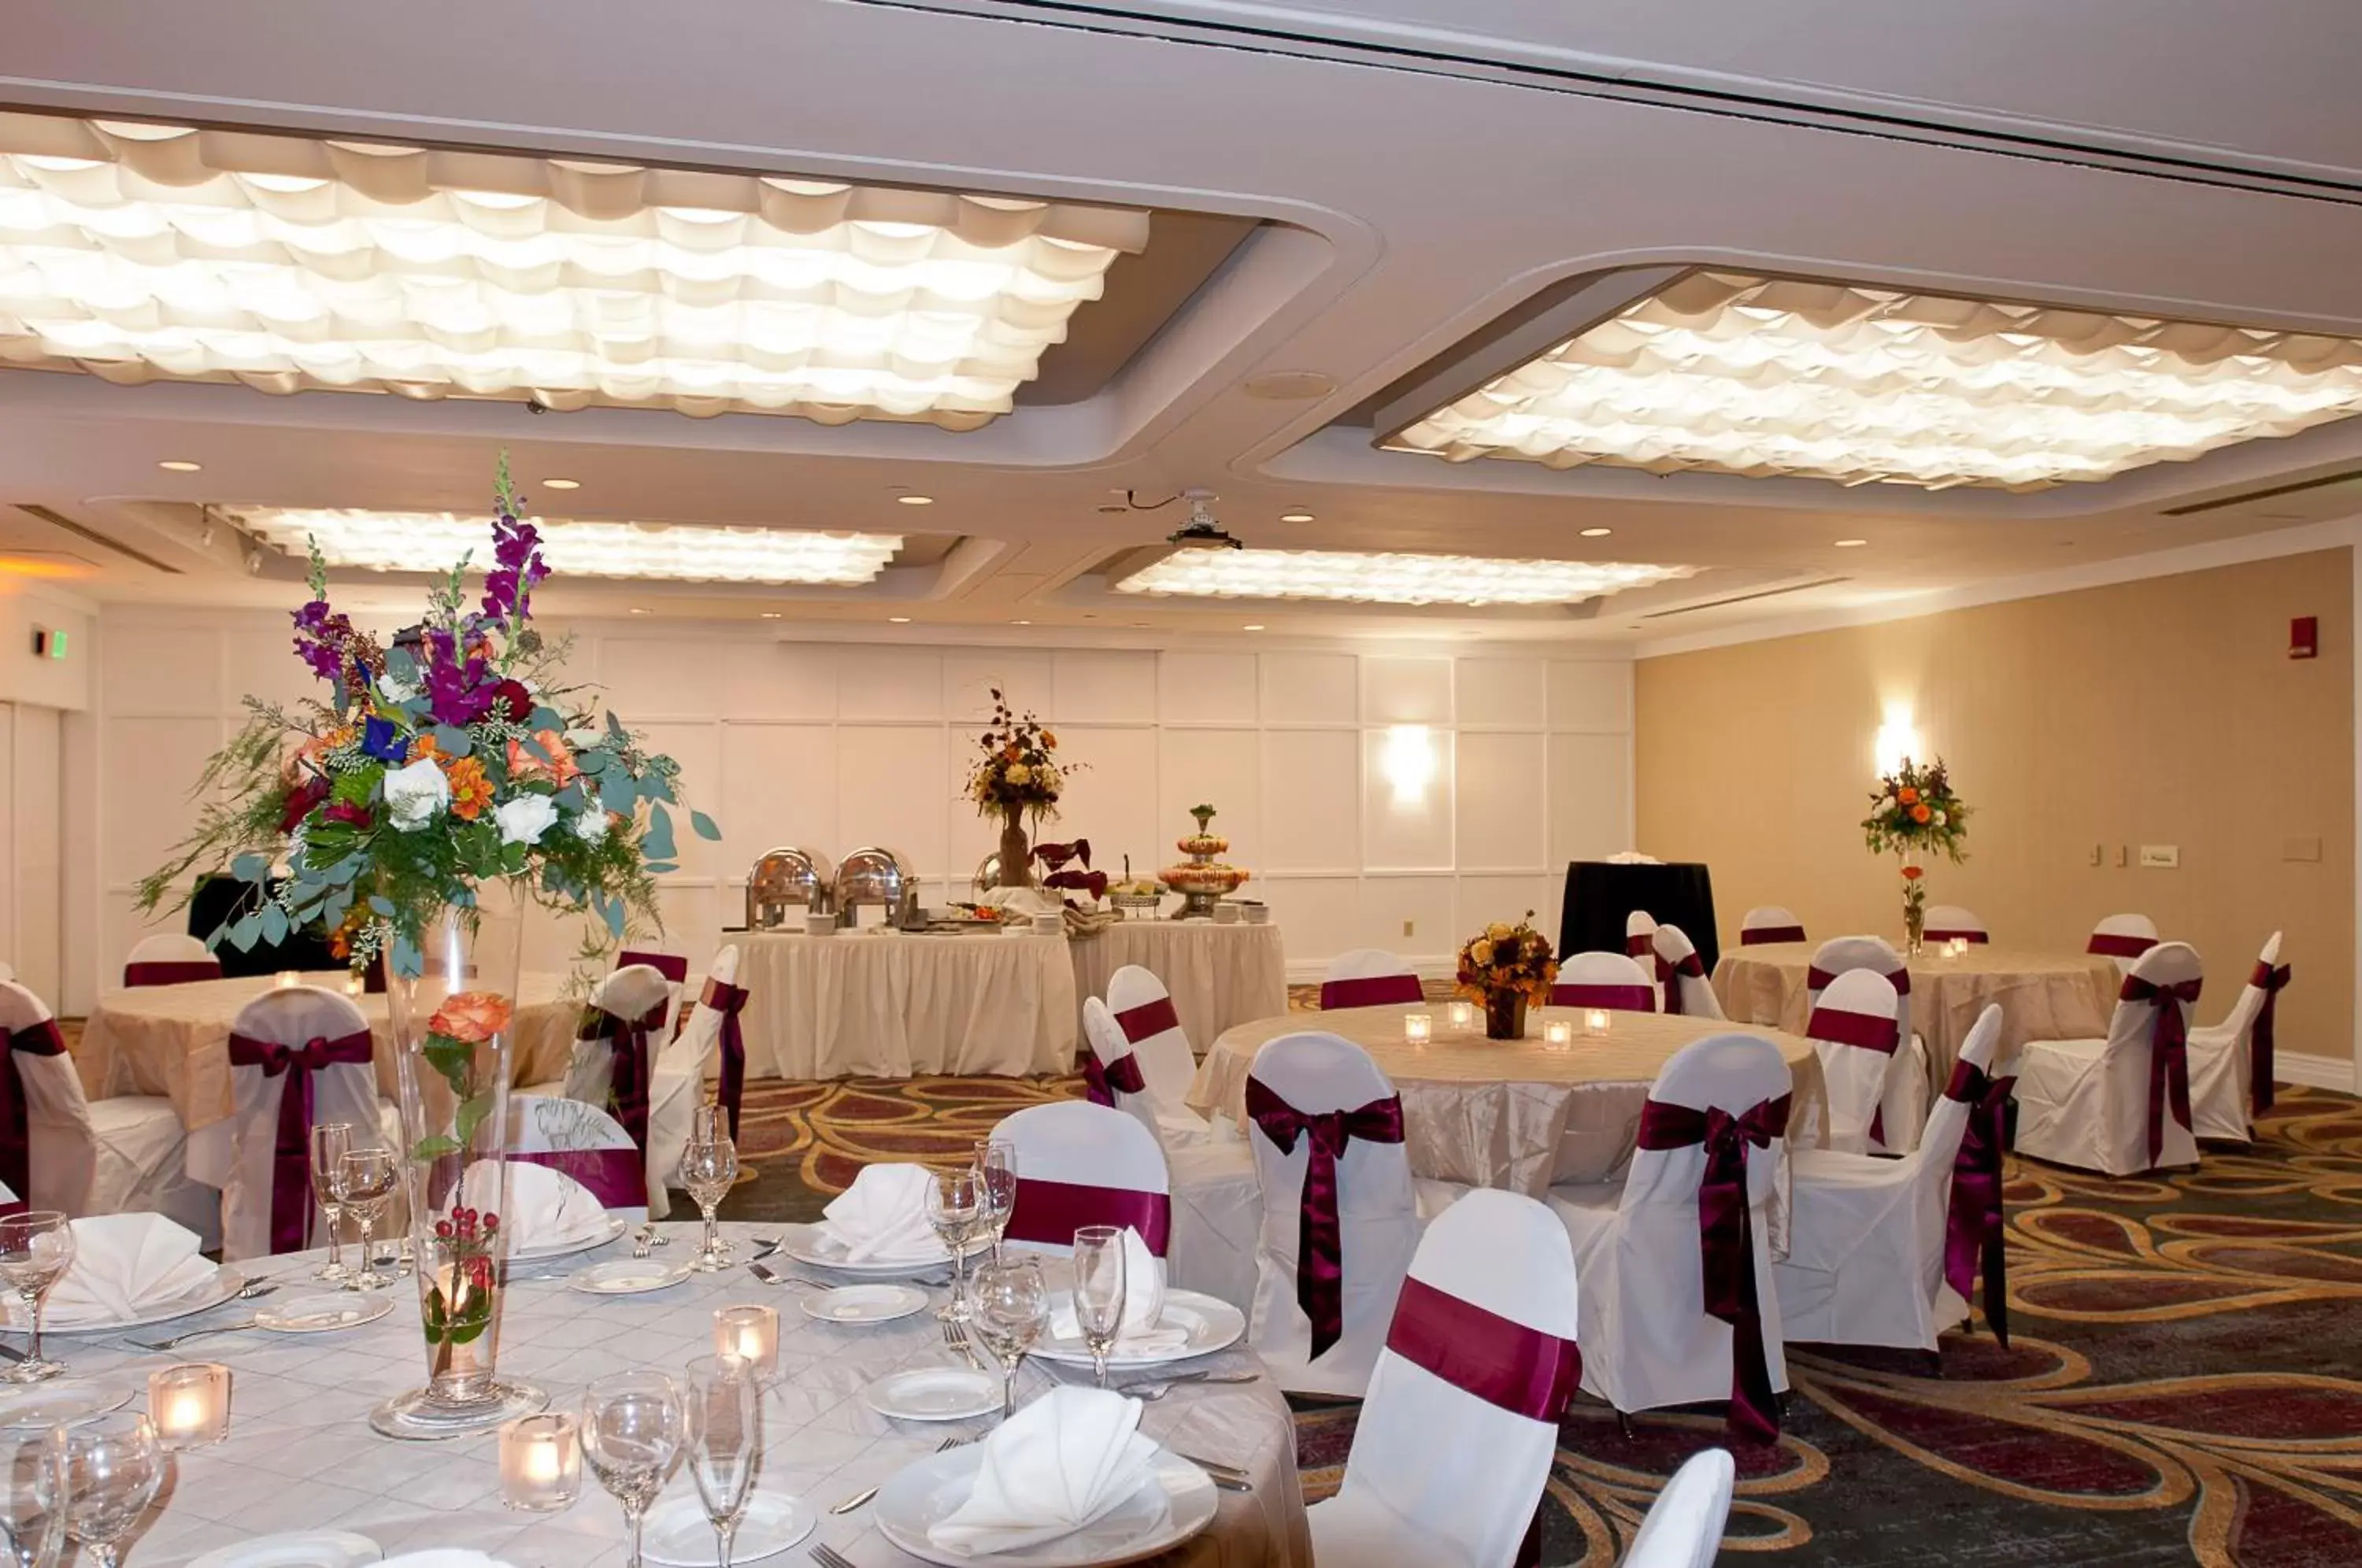 Banquet/Function facilities, Banquet Facilities in Radisson Hotel Corning